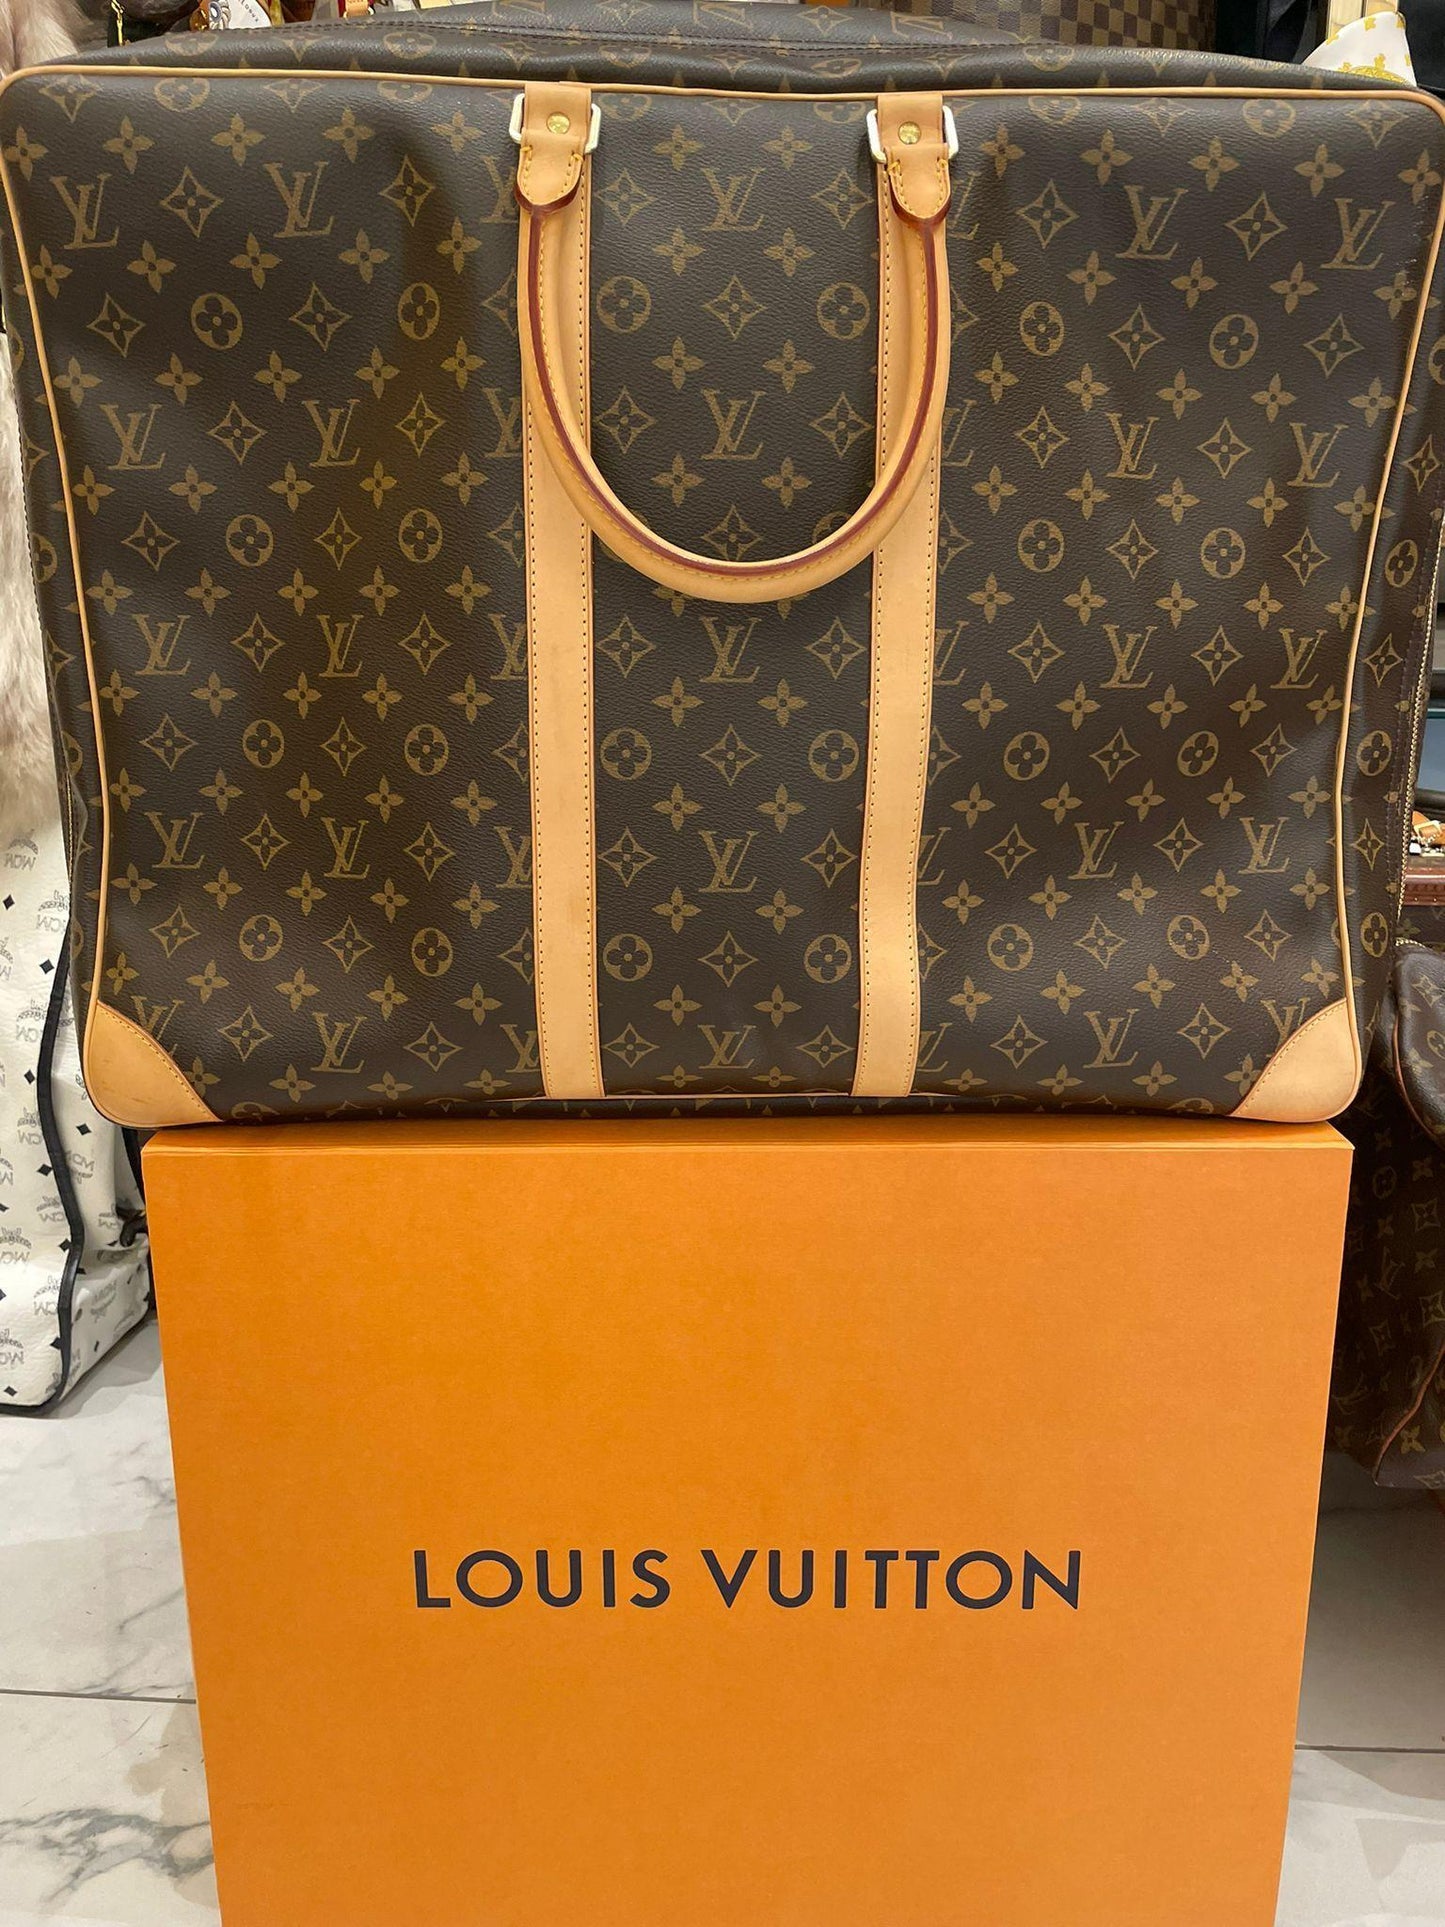 Louis Vuitton - Reisegepäck